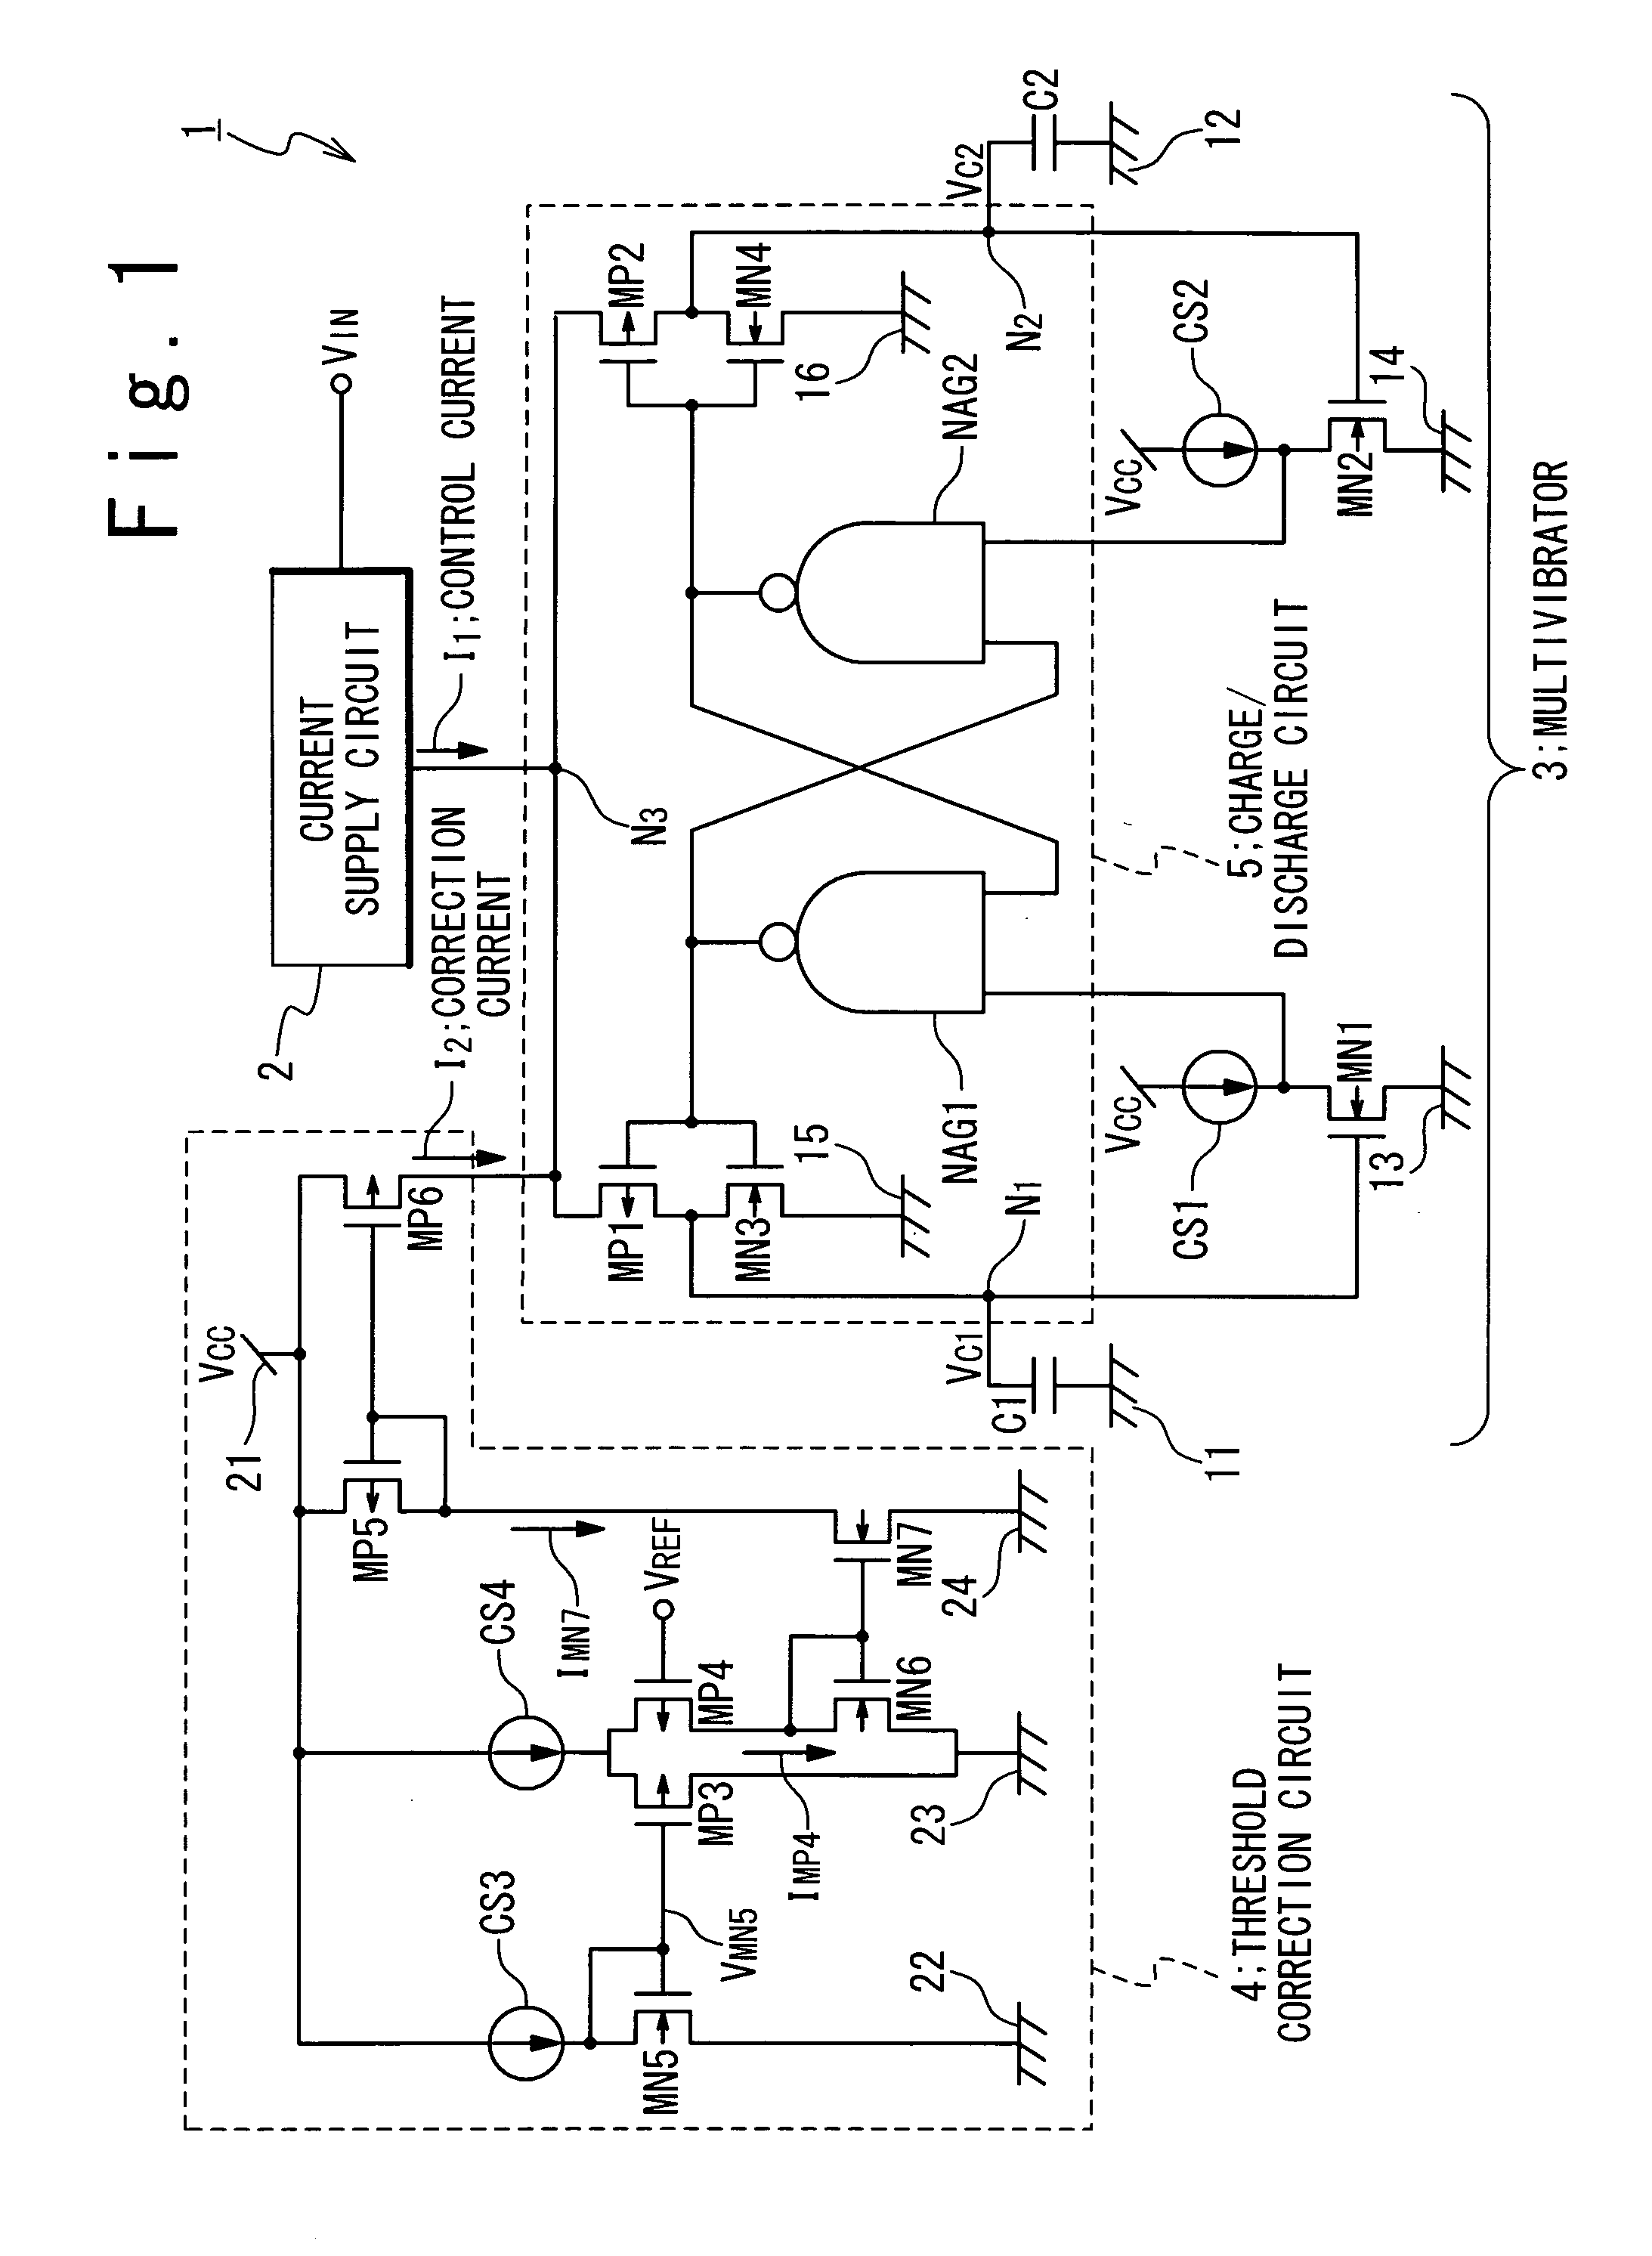 Oscillation circuit and operation method thereof